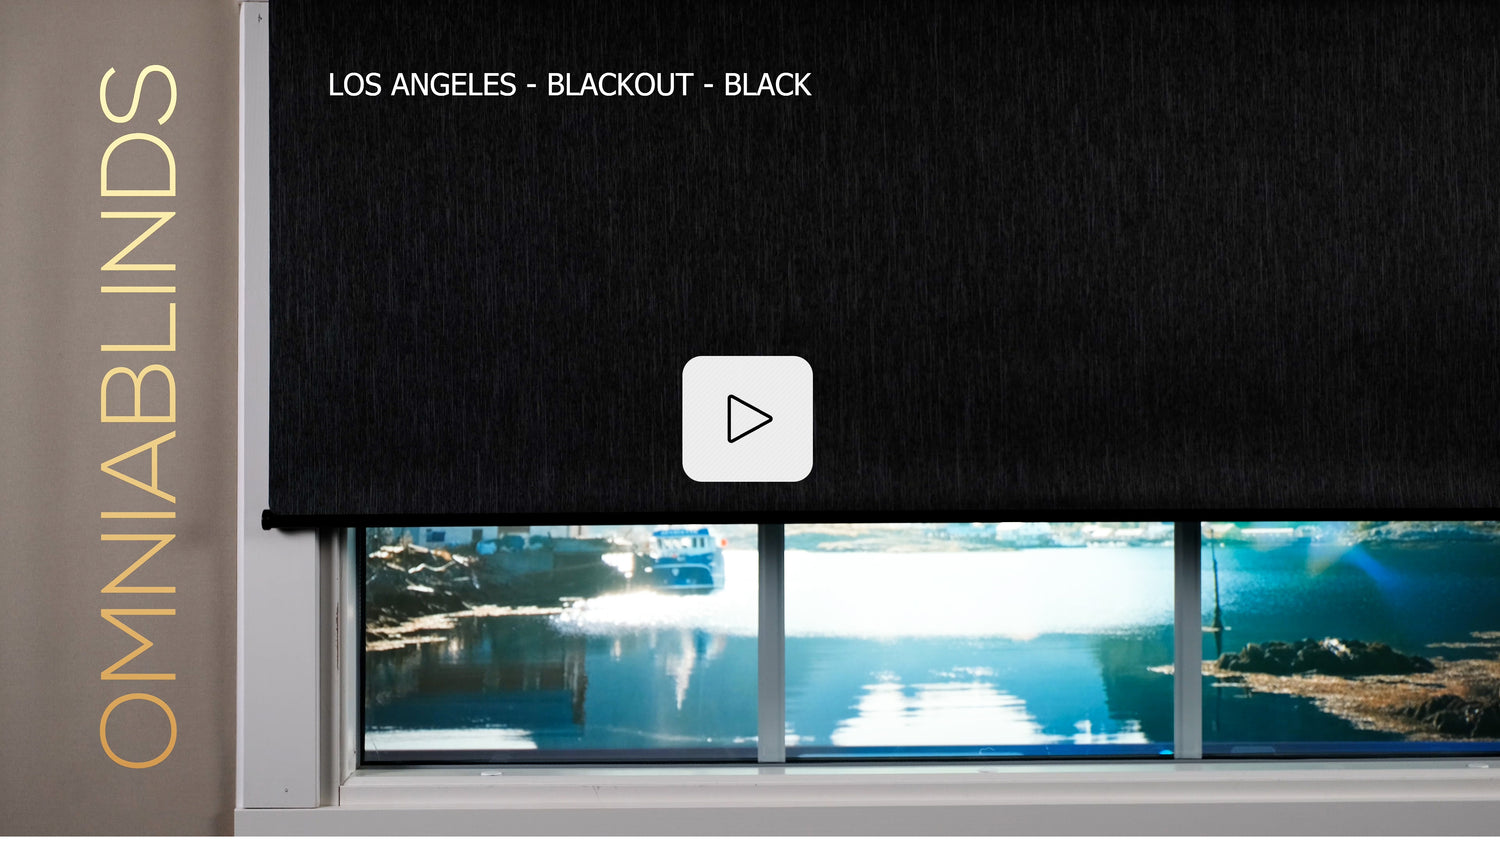 Los Angeles - Blackout - Black